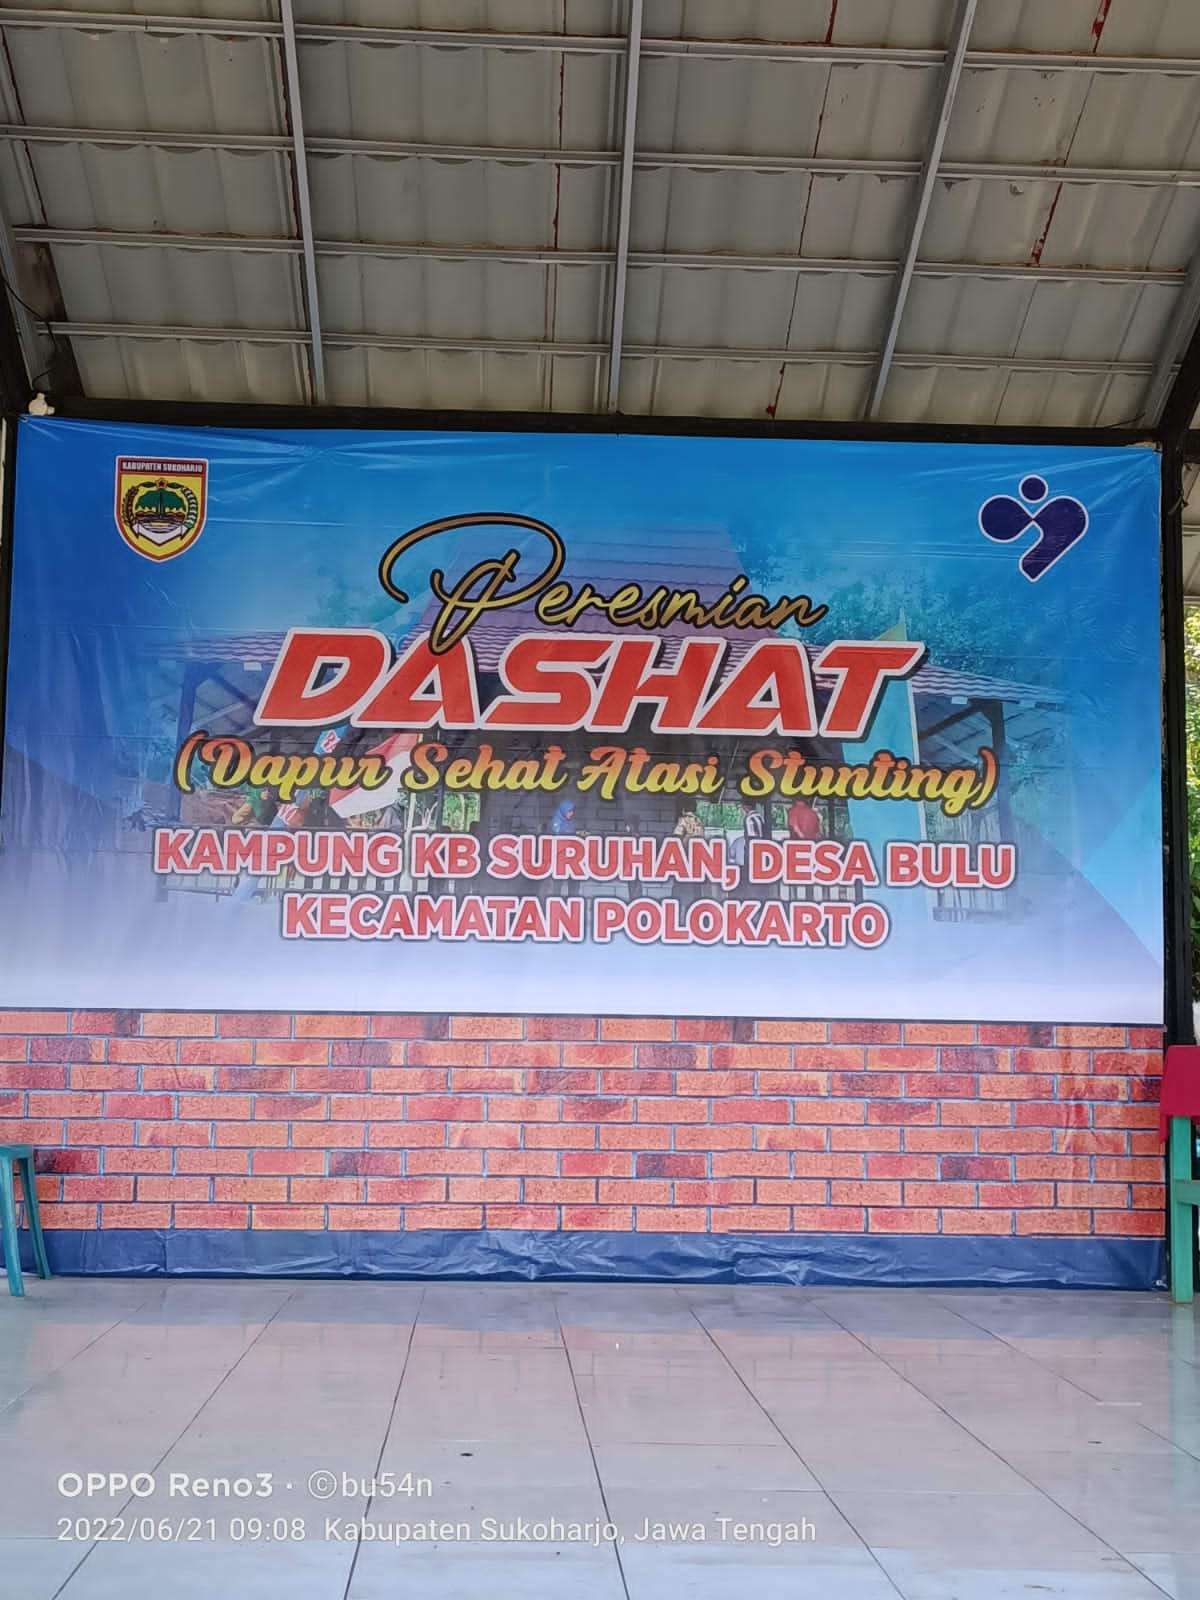 Launching DASHAT di Kampung KB Suruhan